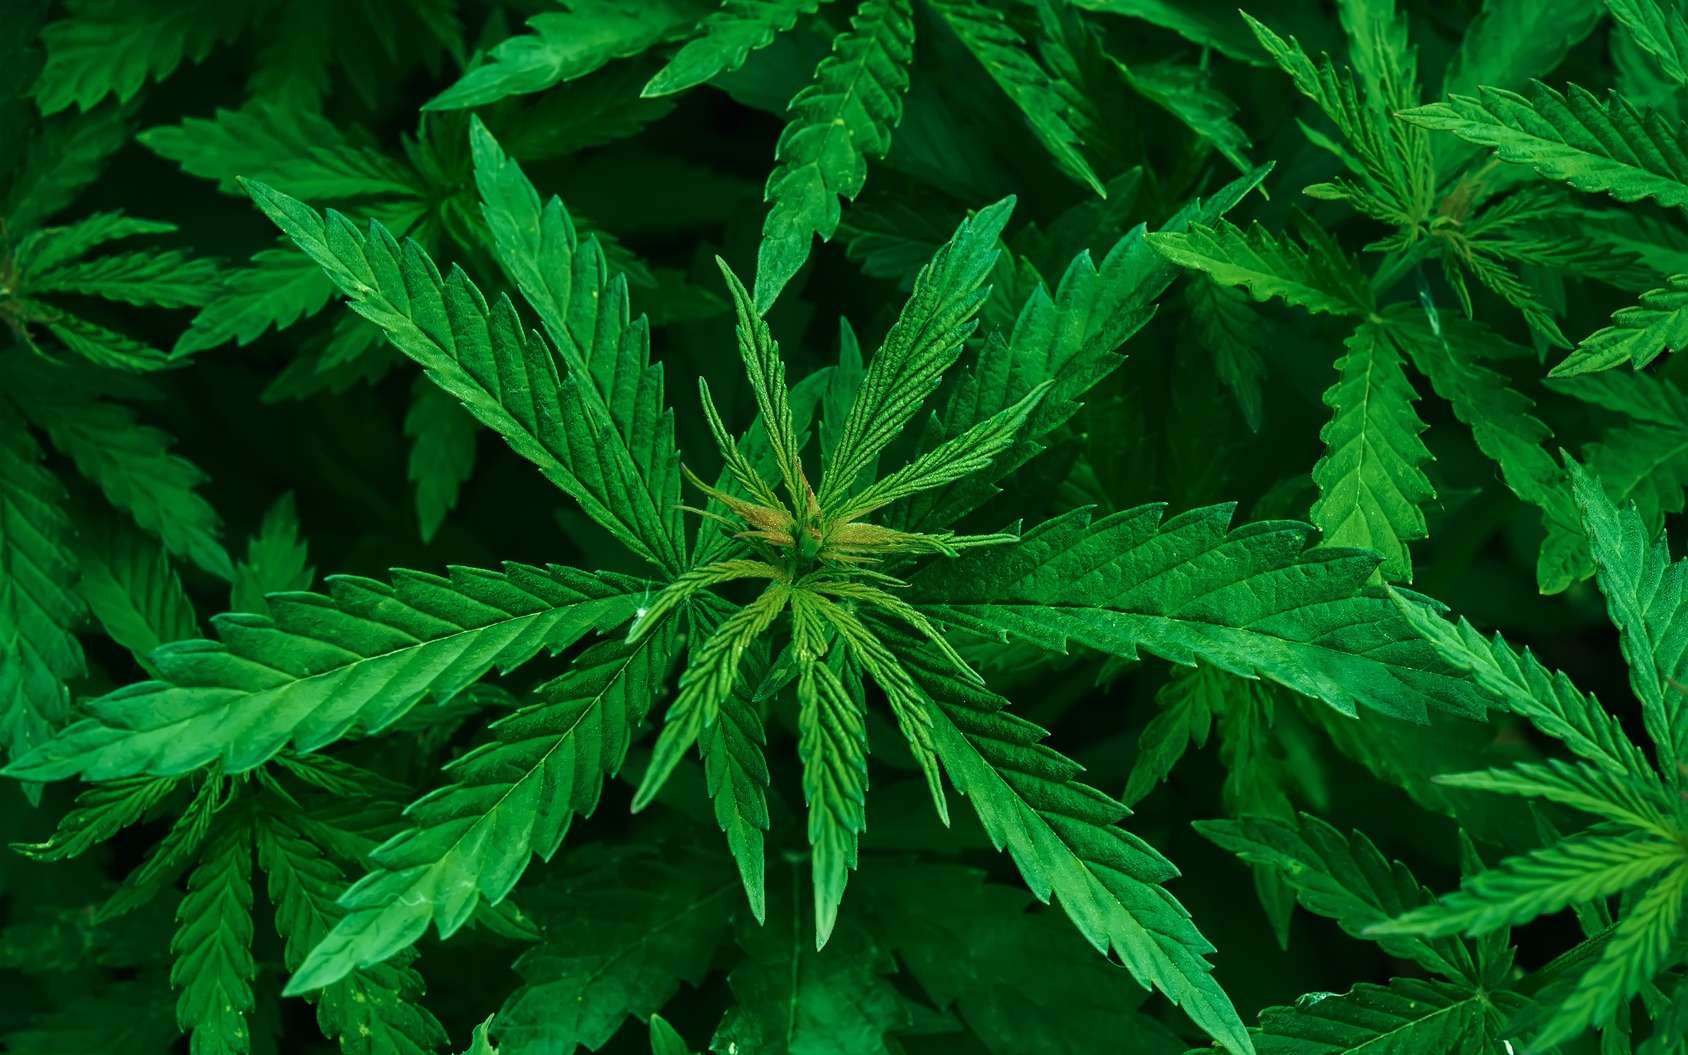 Fancy Herbal Grinders Growing Among Marijuana Users